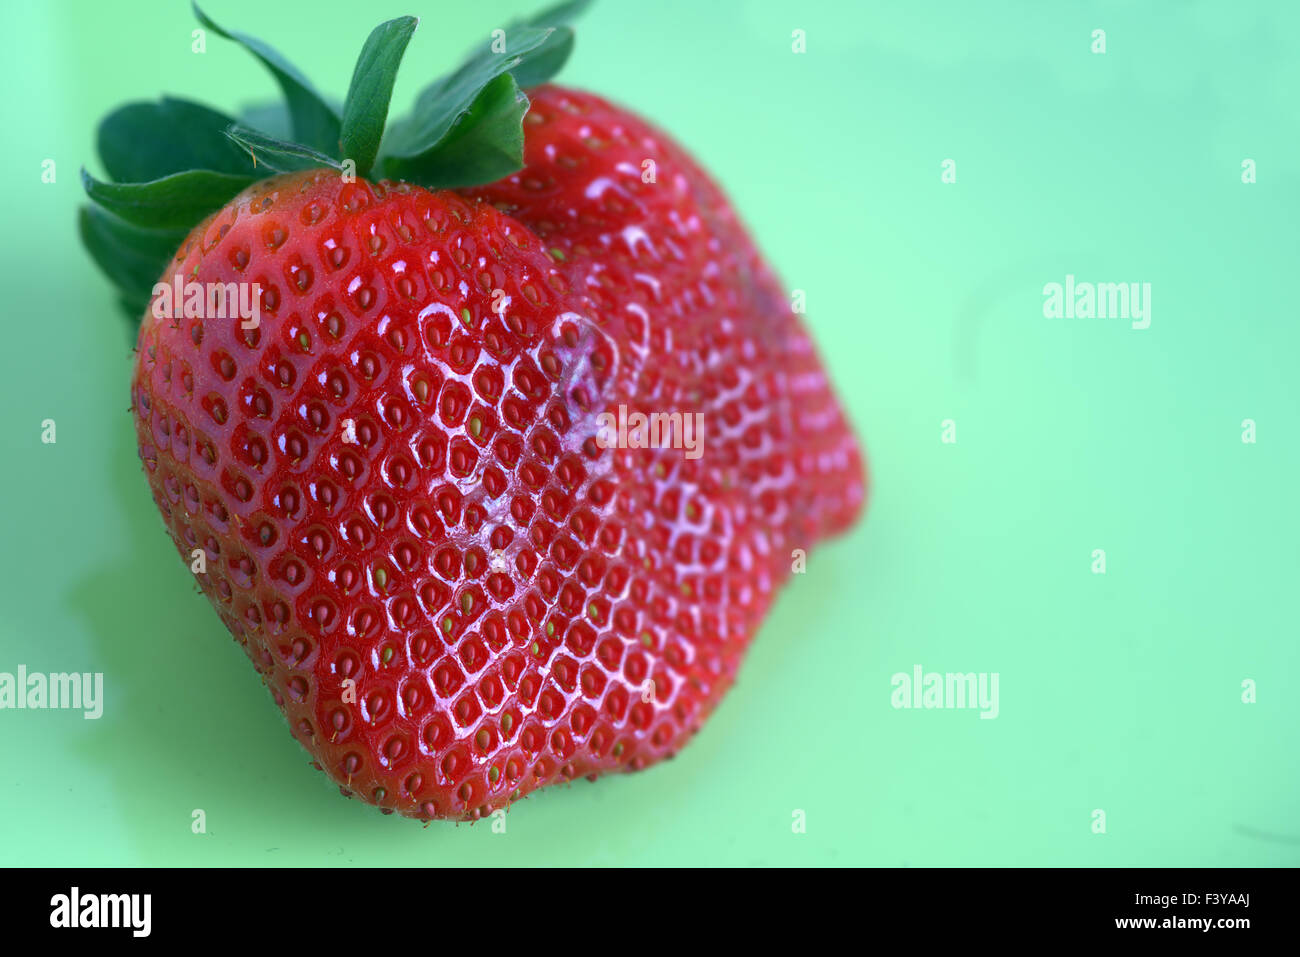 Giant strawberry Stock Photo